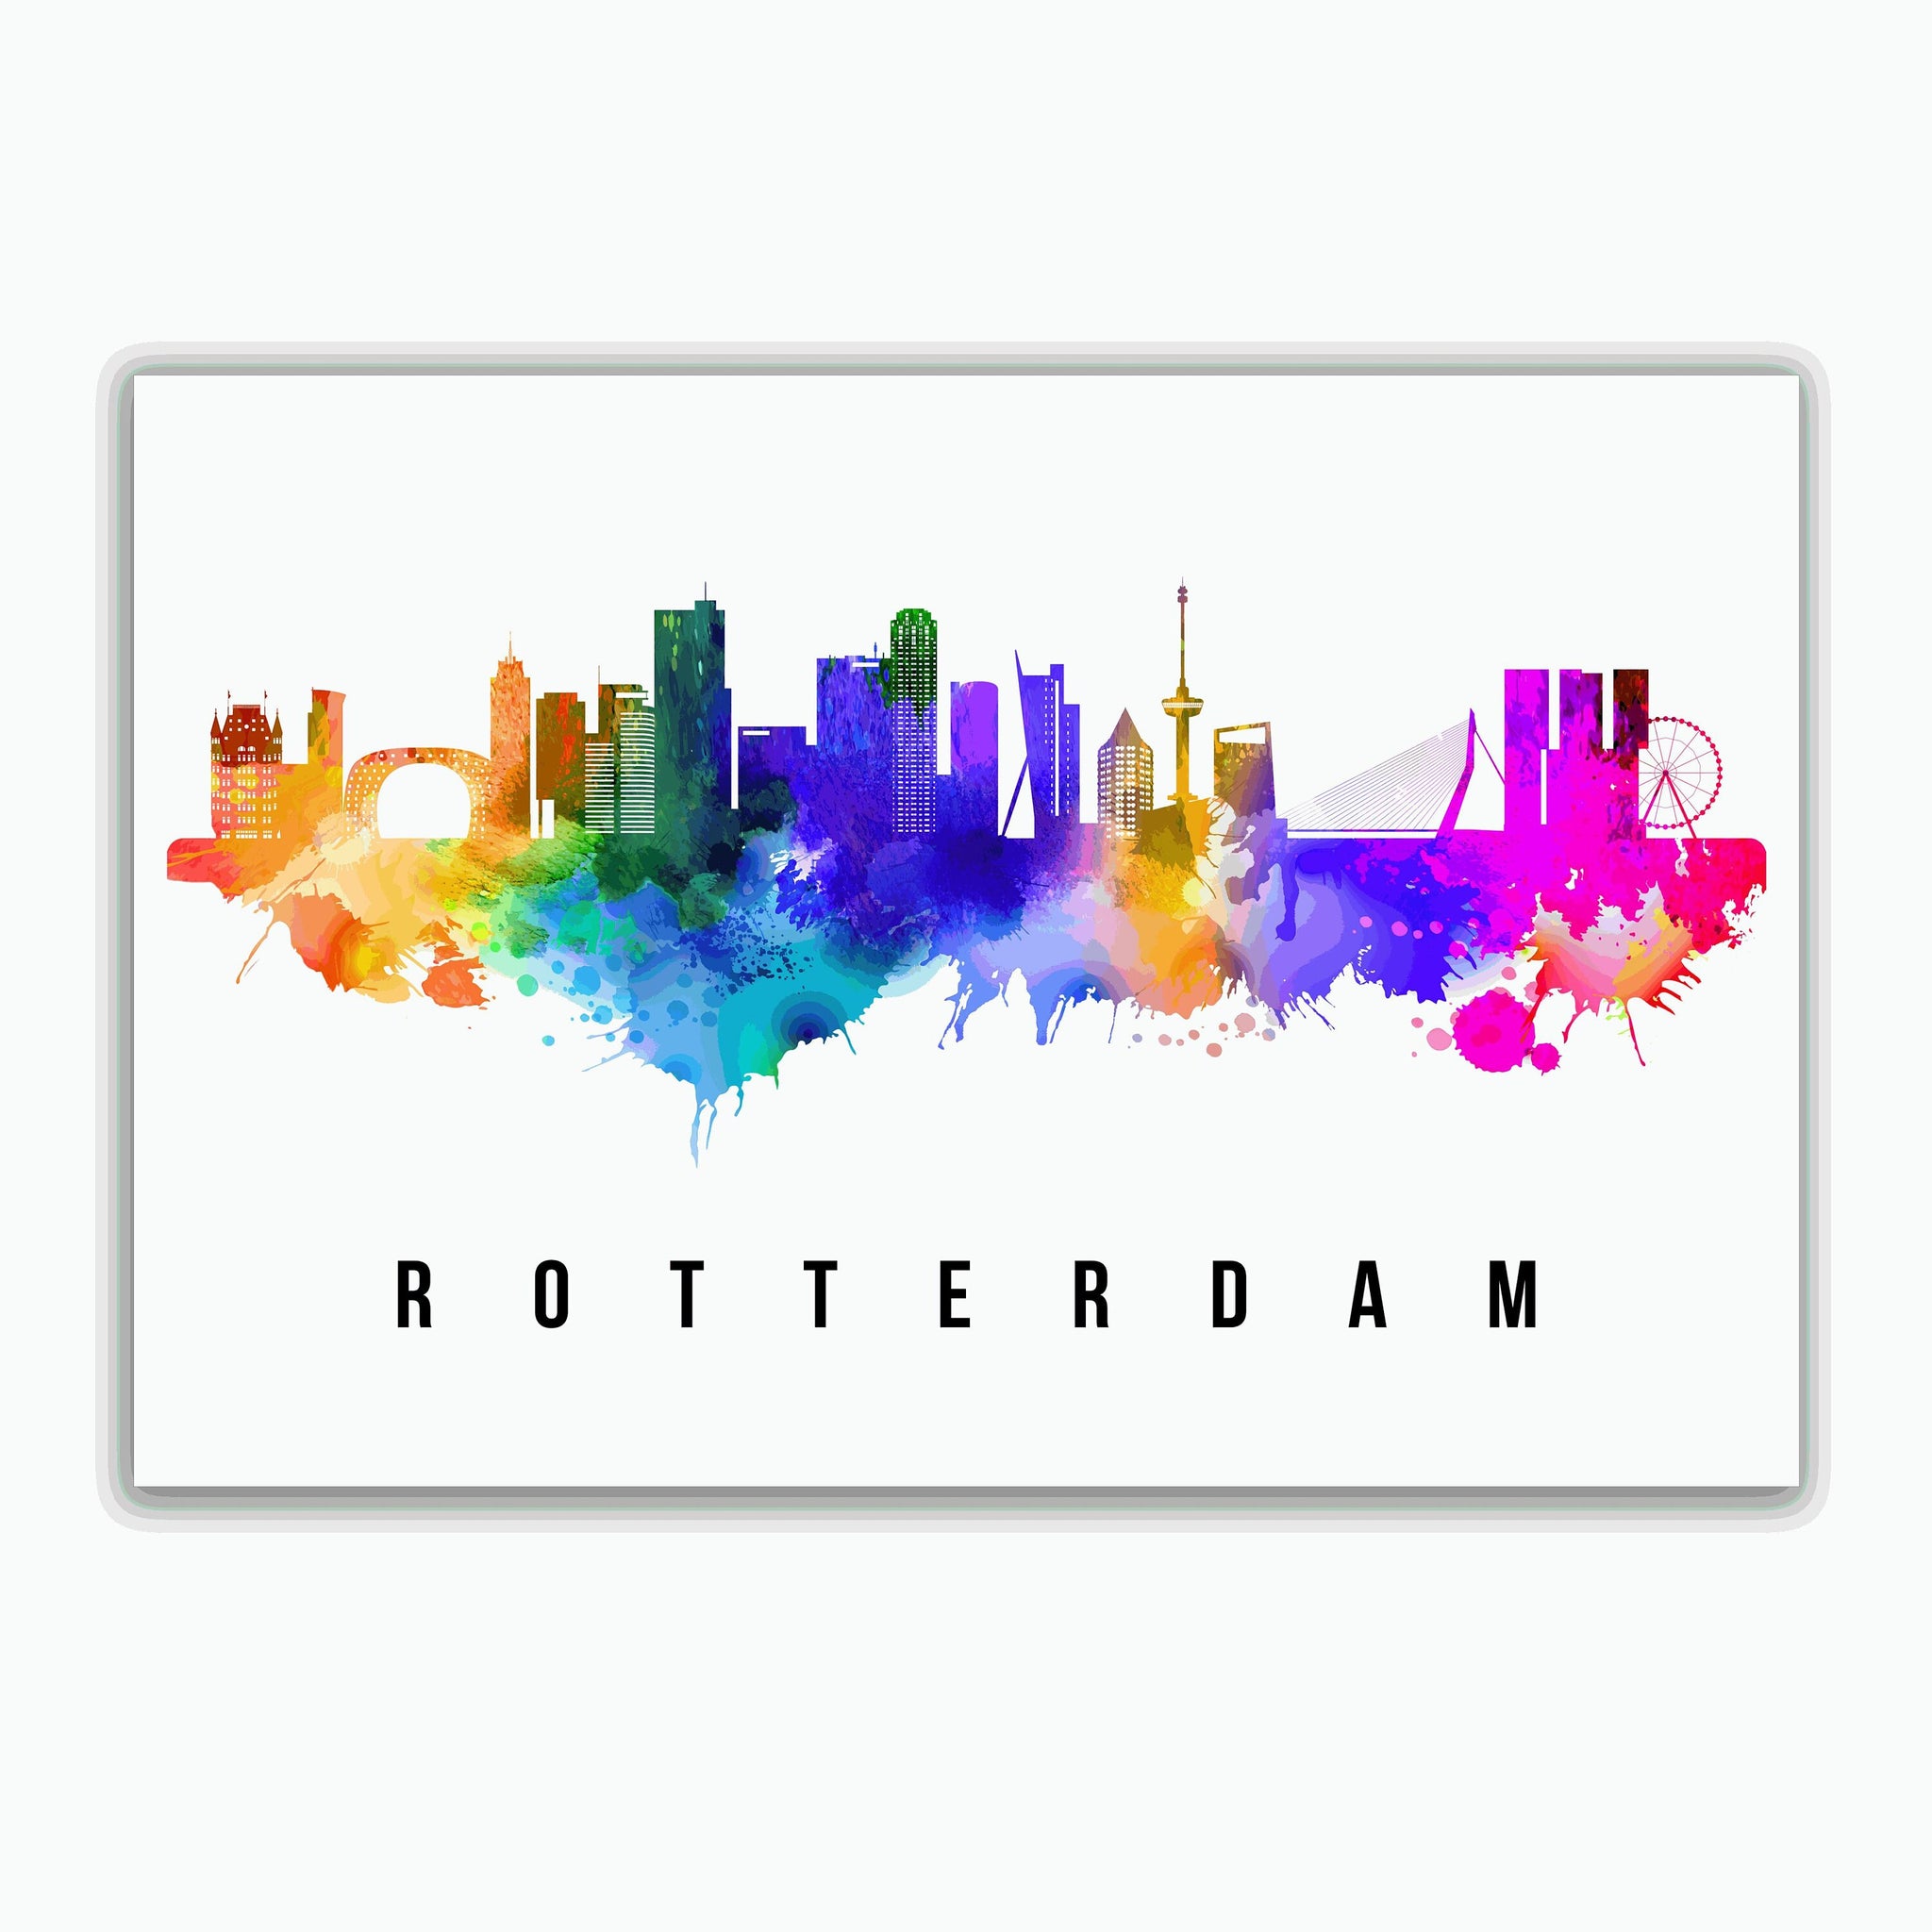 ROTTERDAM - NETHERLAND Poster, Skyline Poster Cityscape and Landmark Rotterdam Illustration Home Wall Art, Office Decor